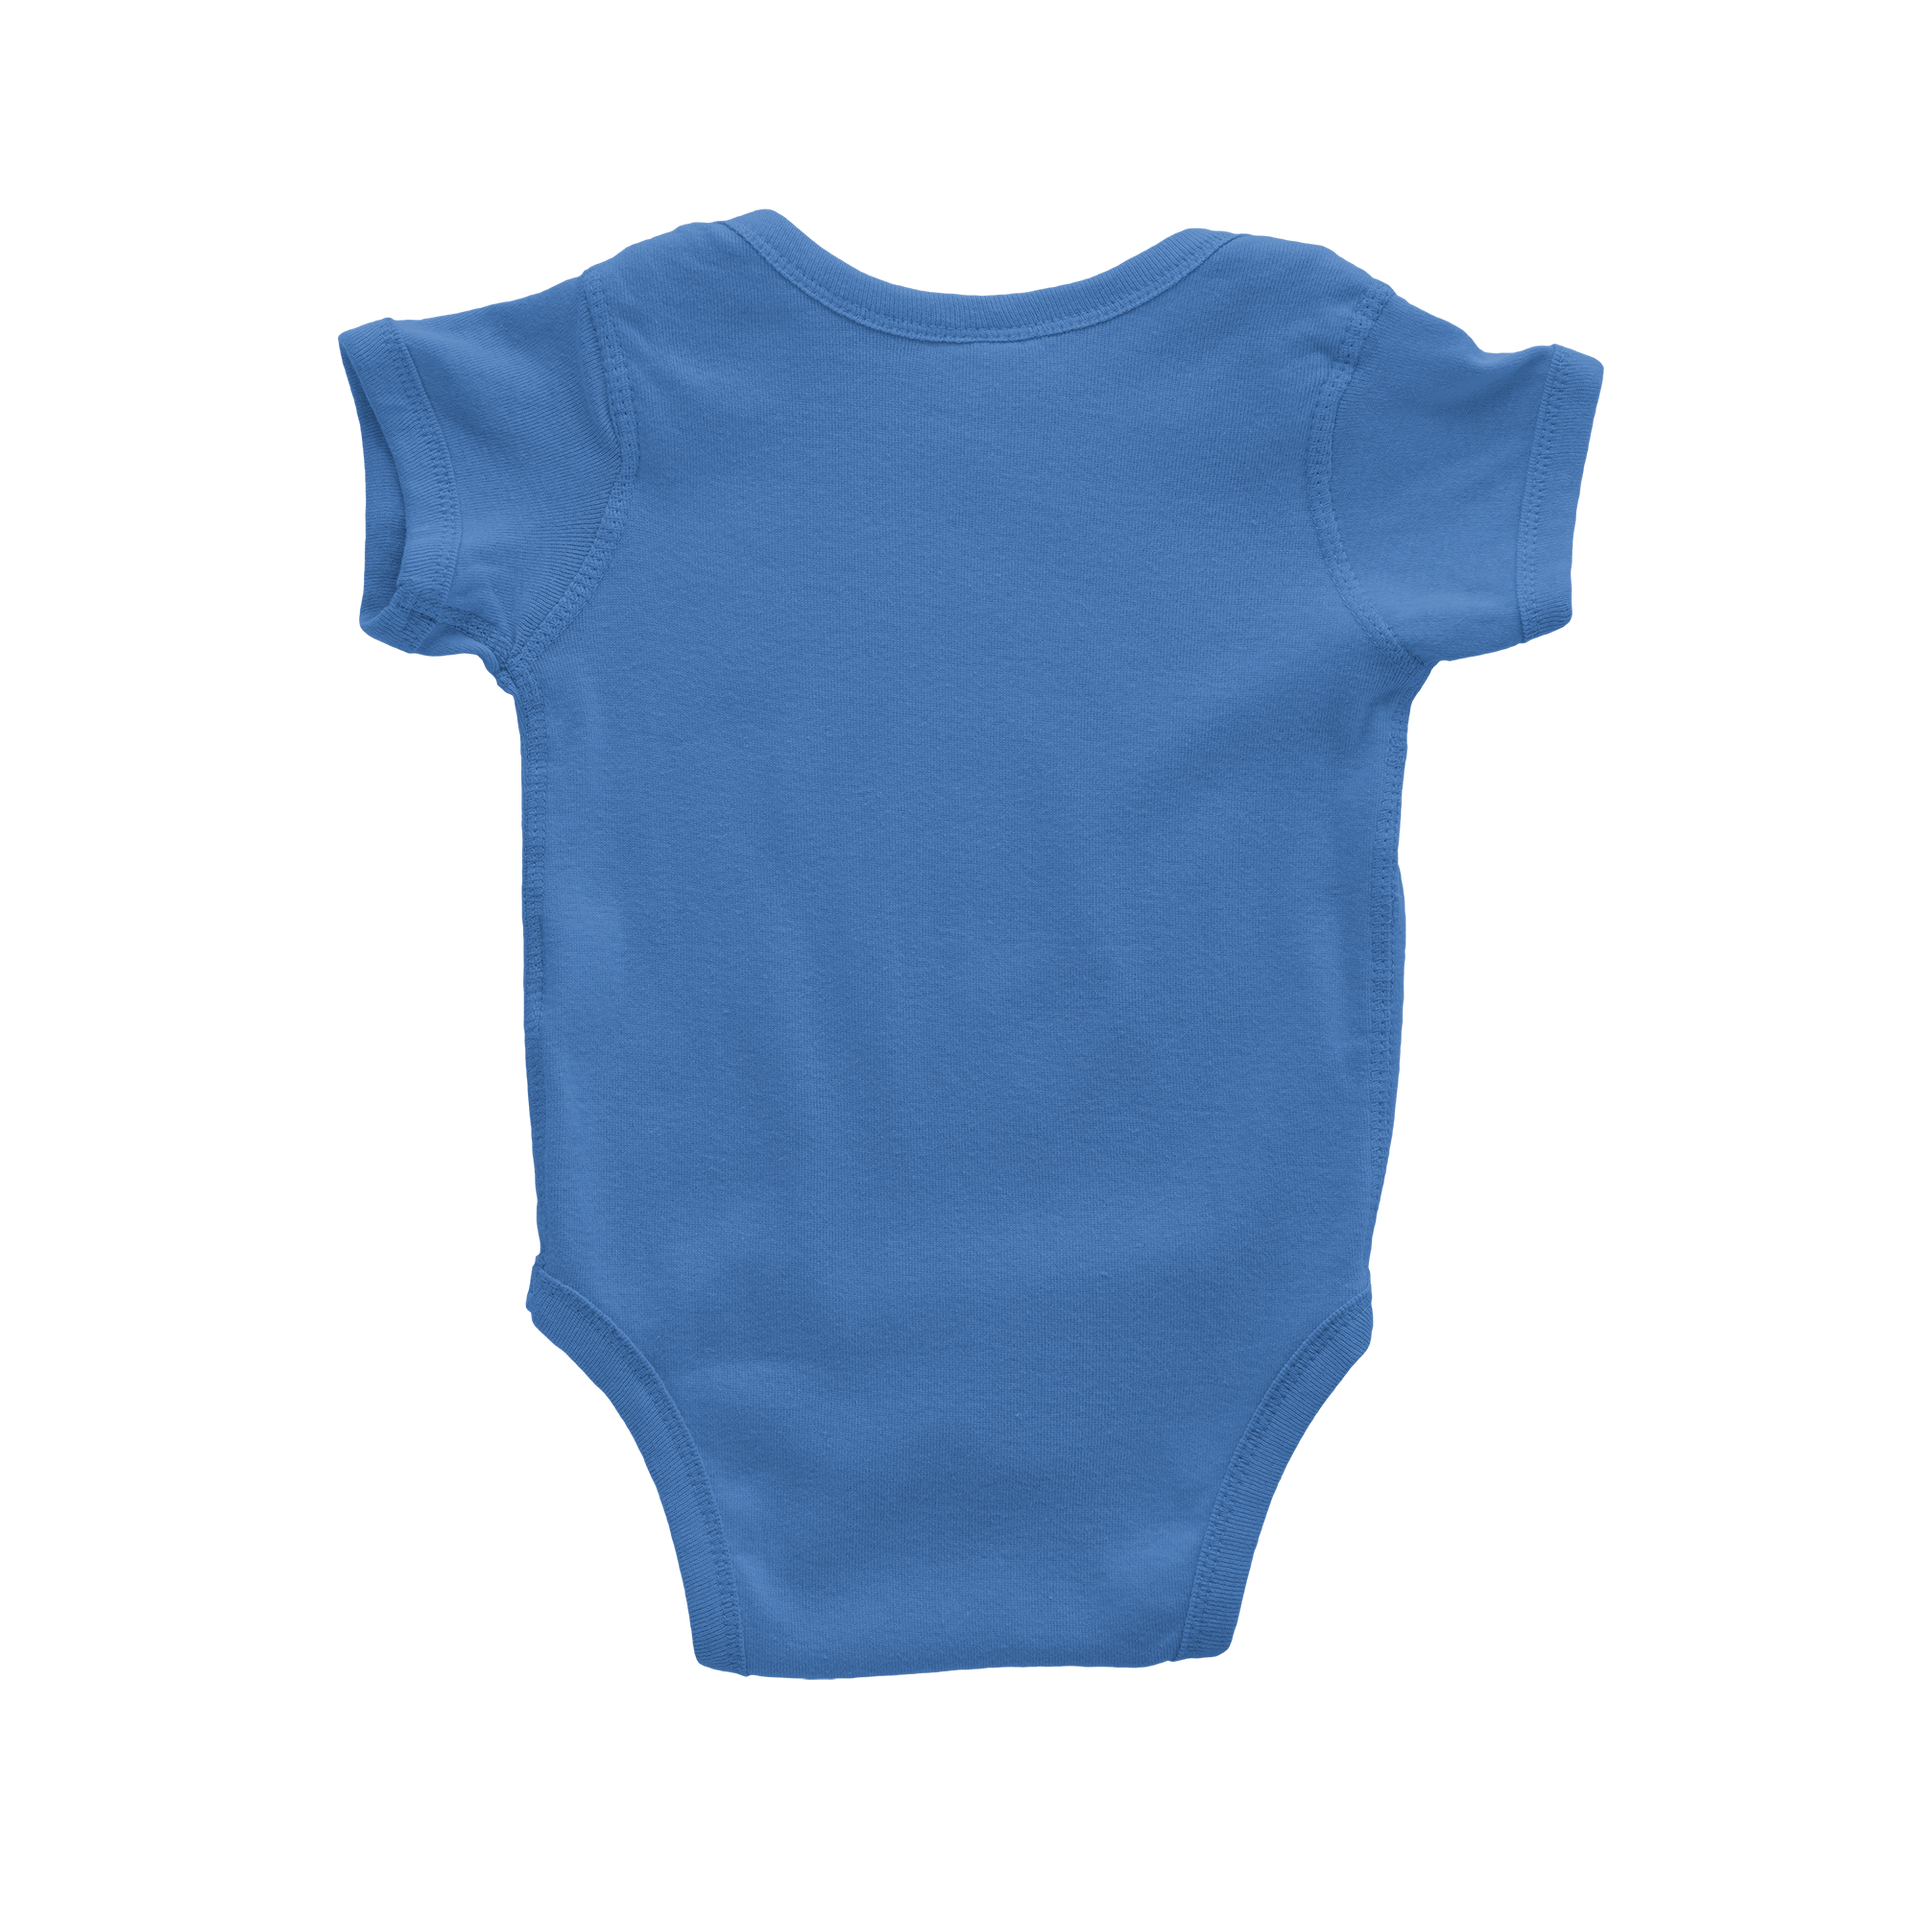 ATCQ Infant Blue Onesie